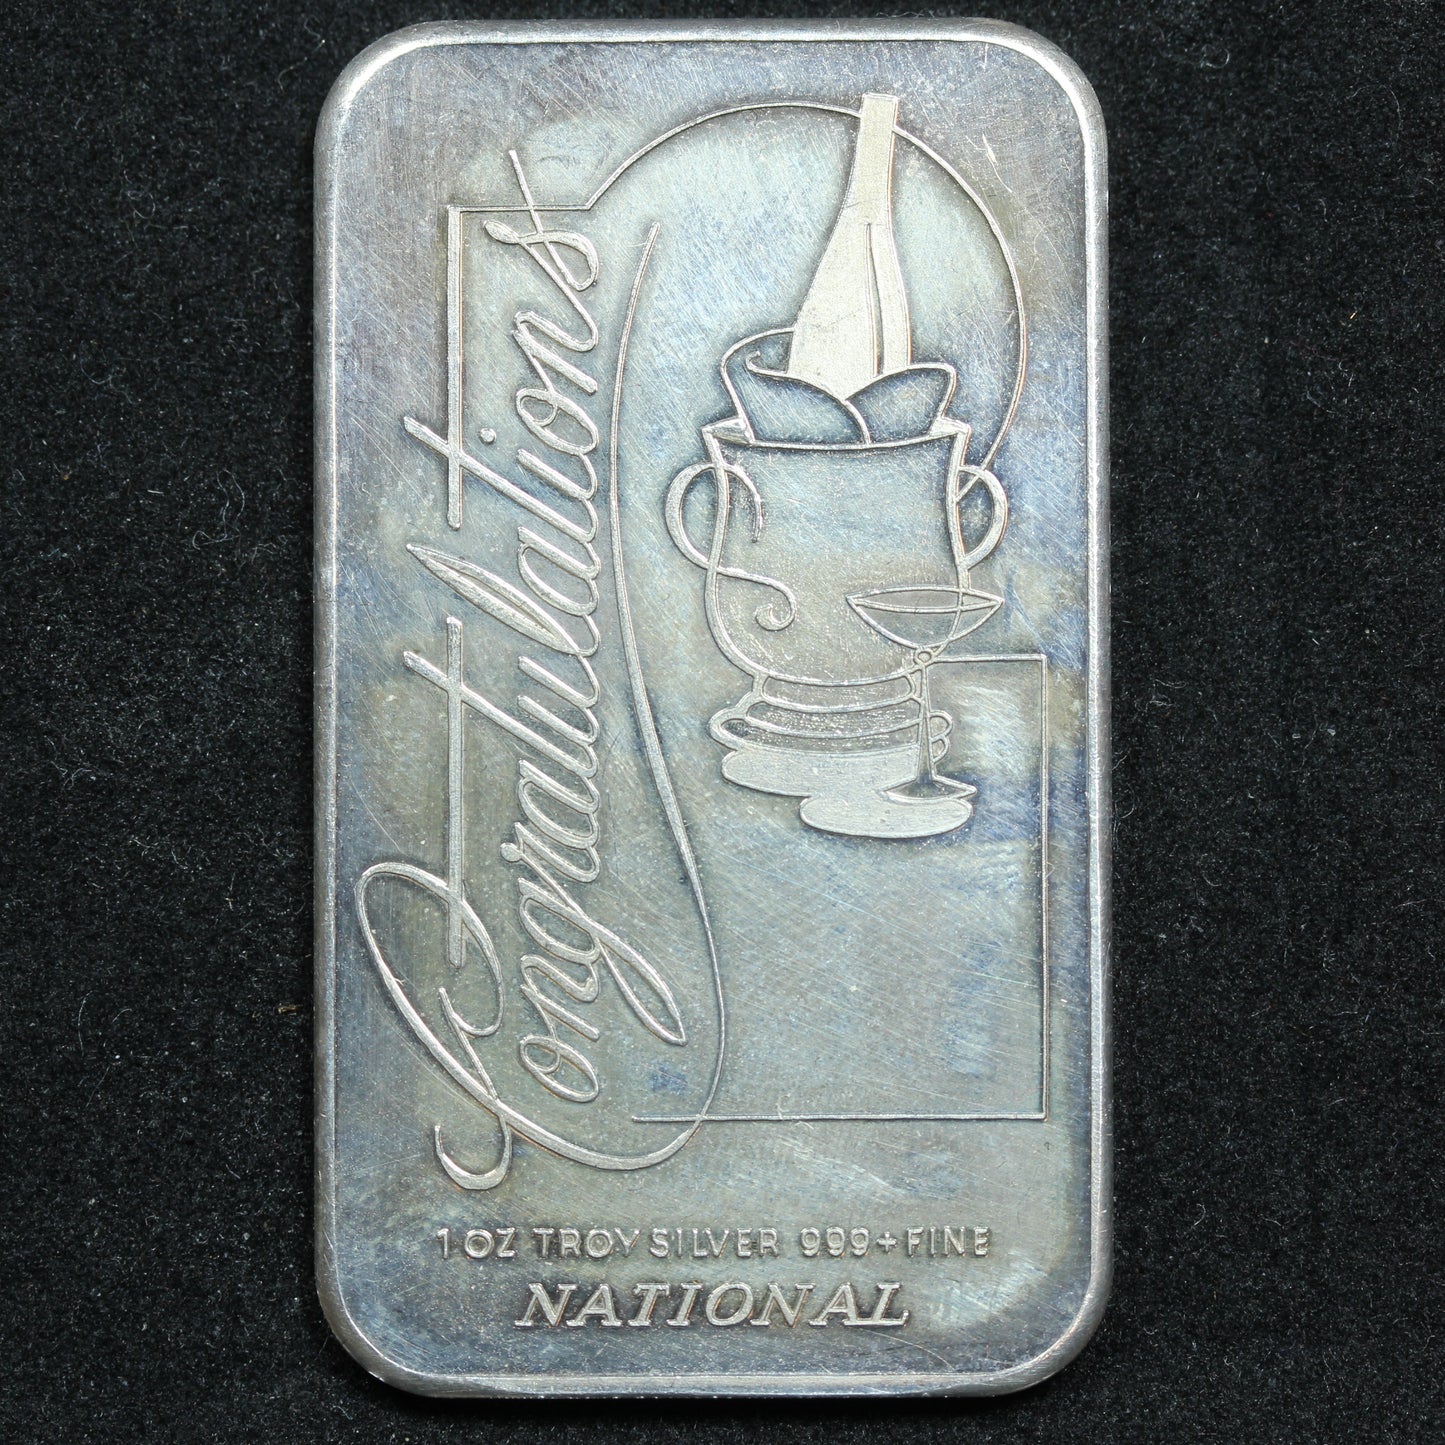 National Mint 1 Troy Oz .999 Fine Silver Ingot Bar - Congratulations